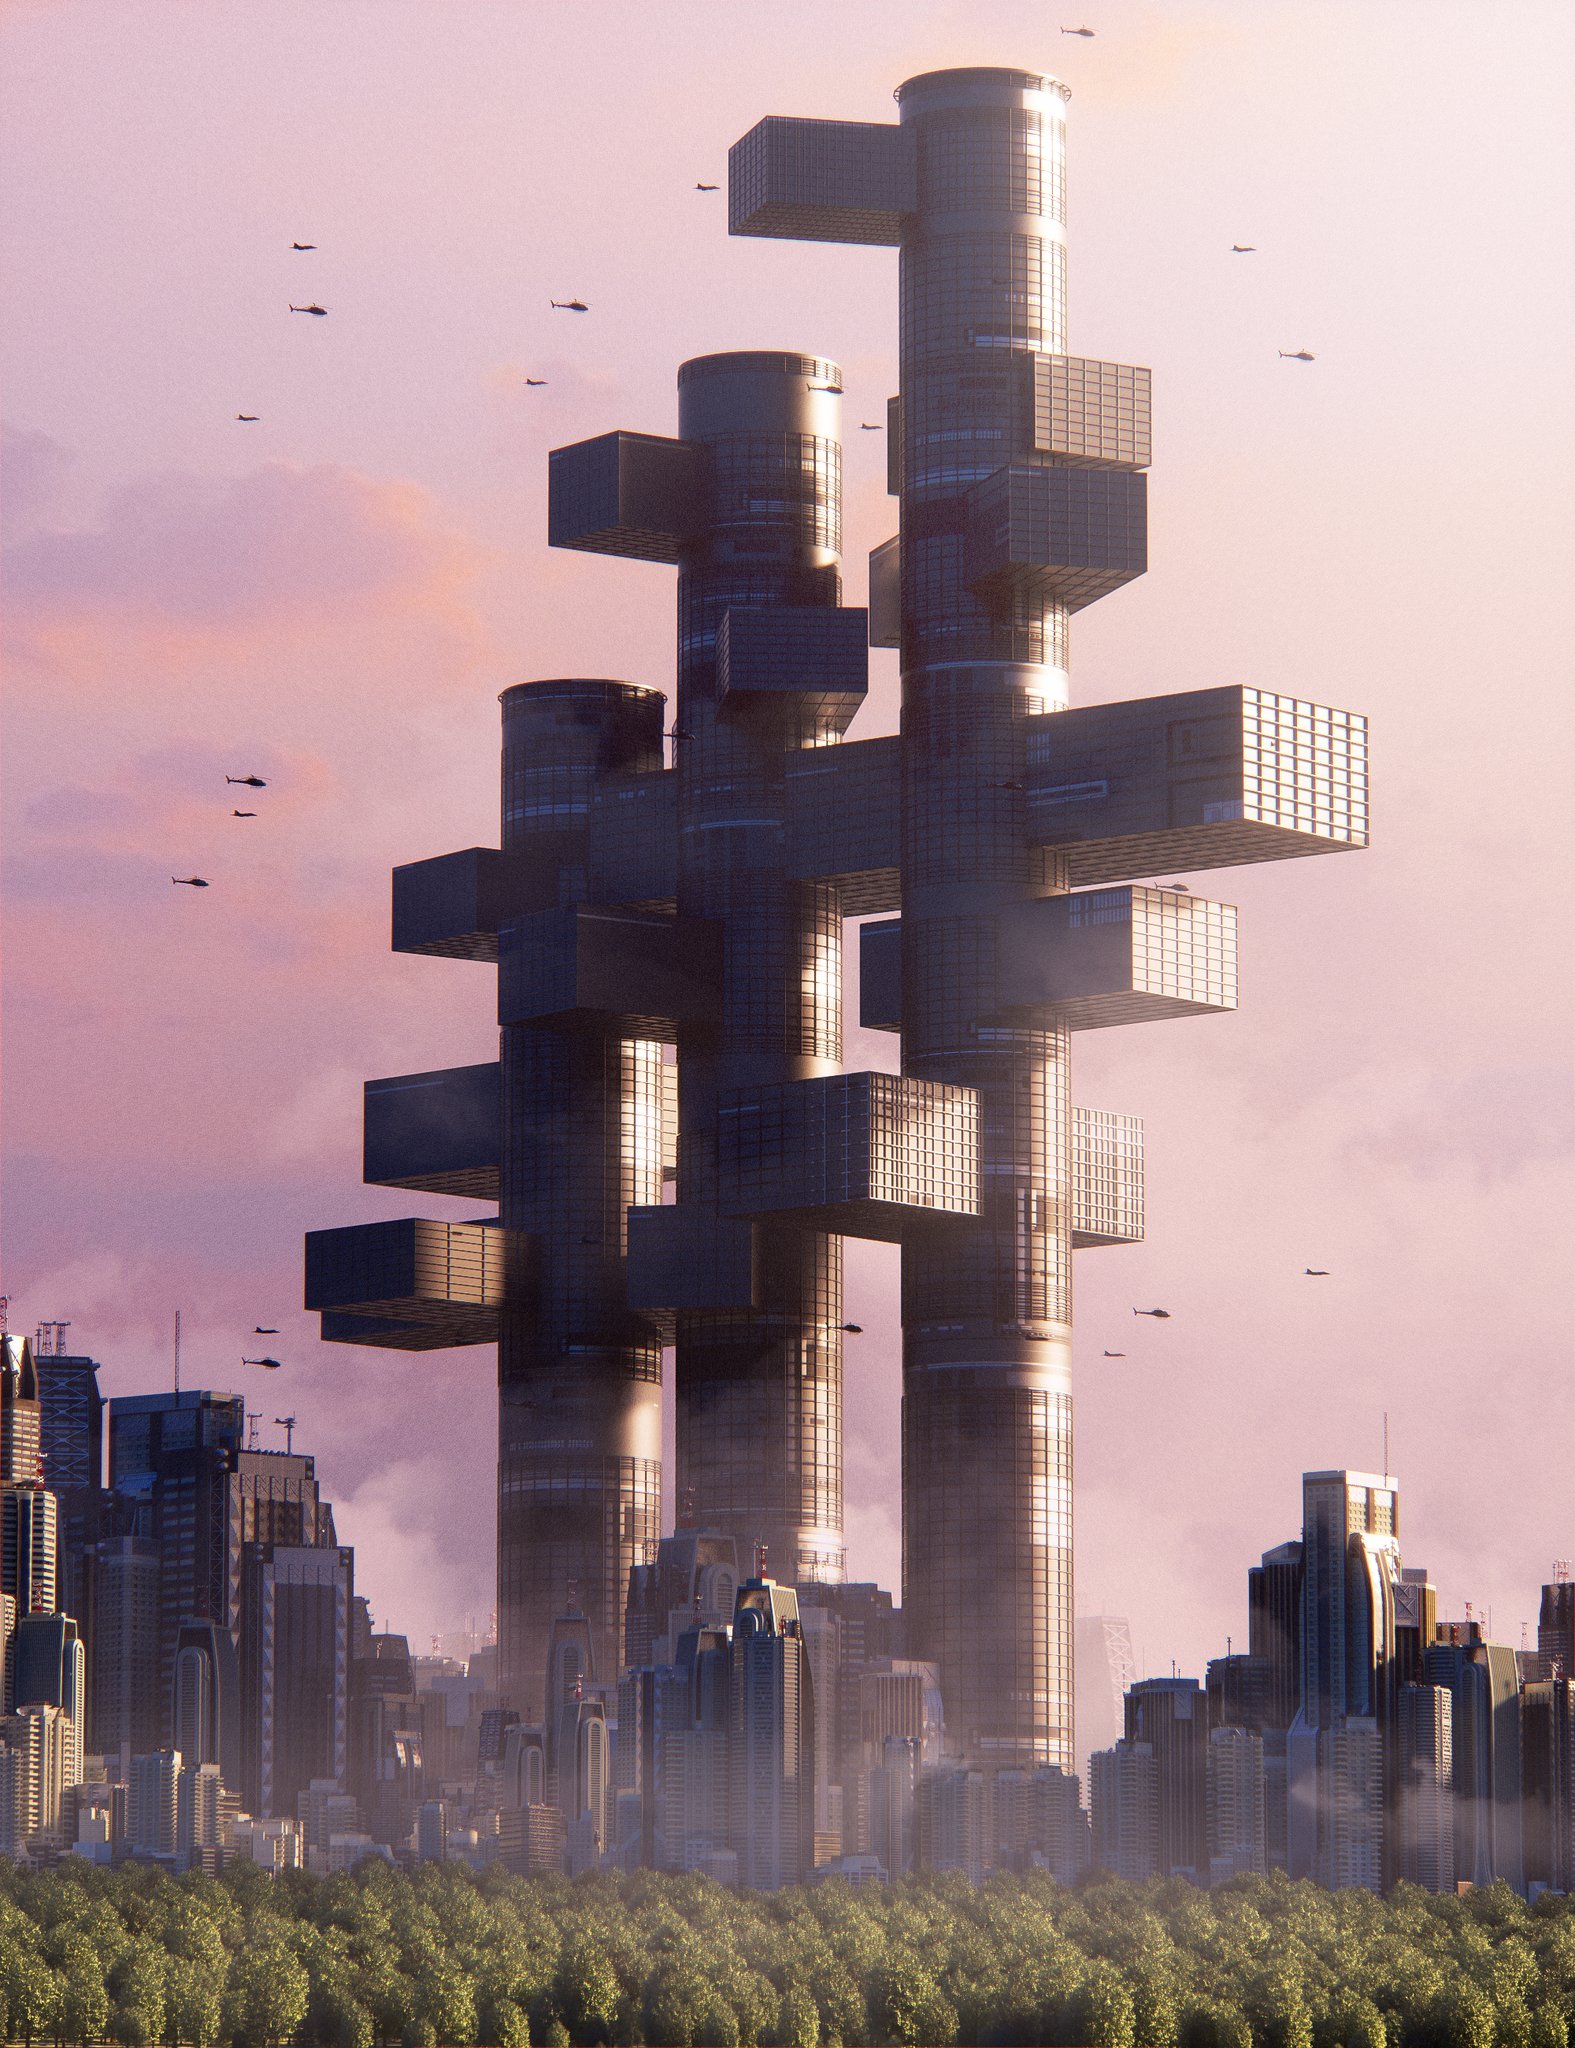 Recreation of Vertical District by Josh Brockett (2021)